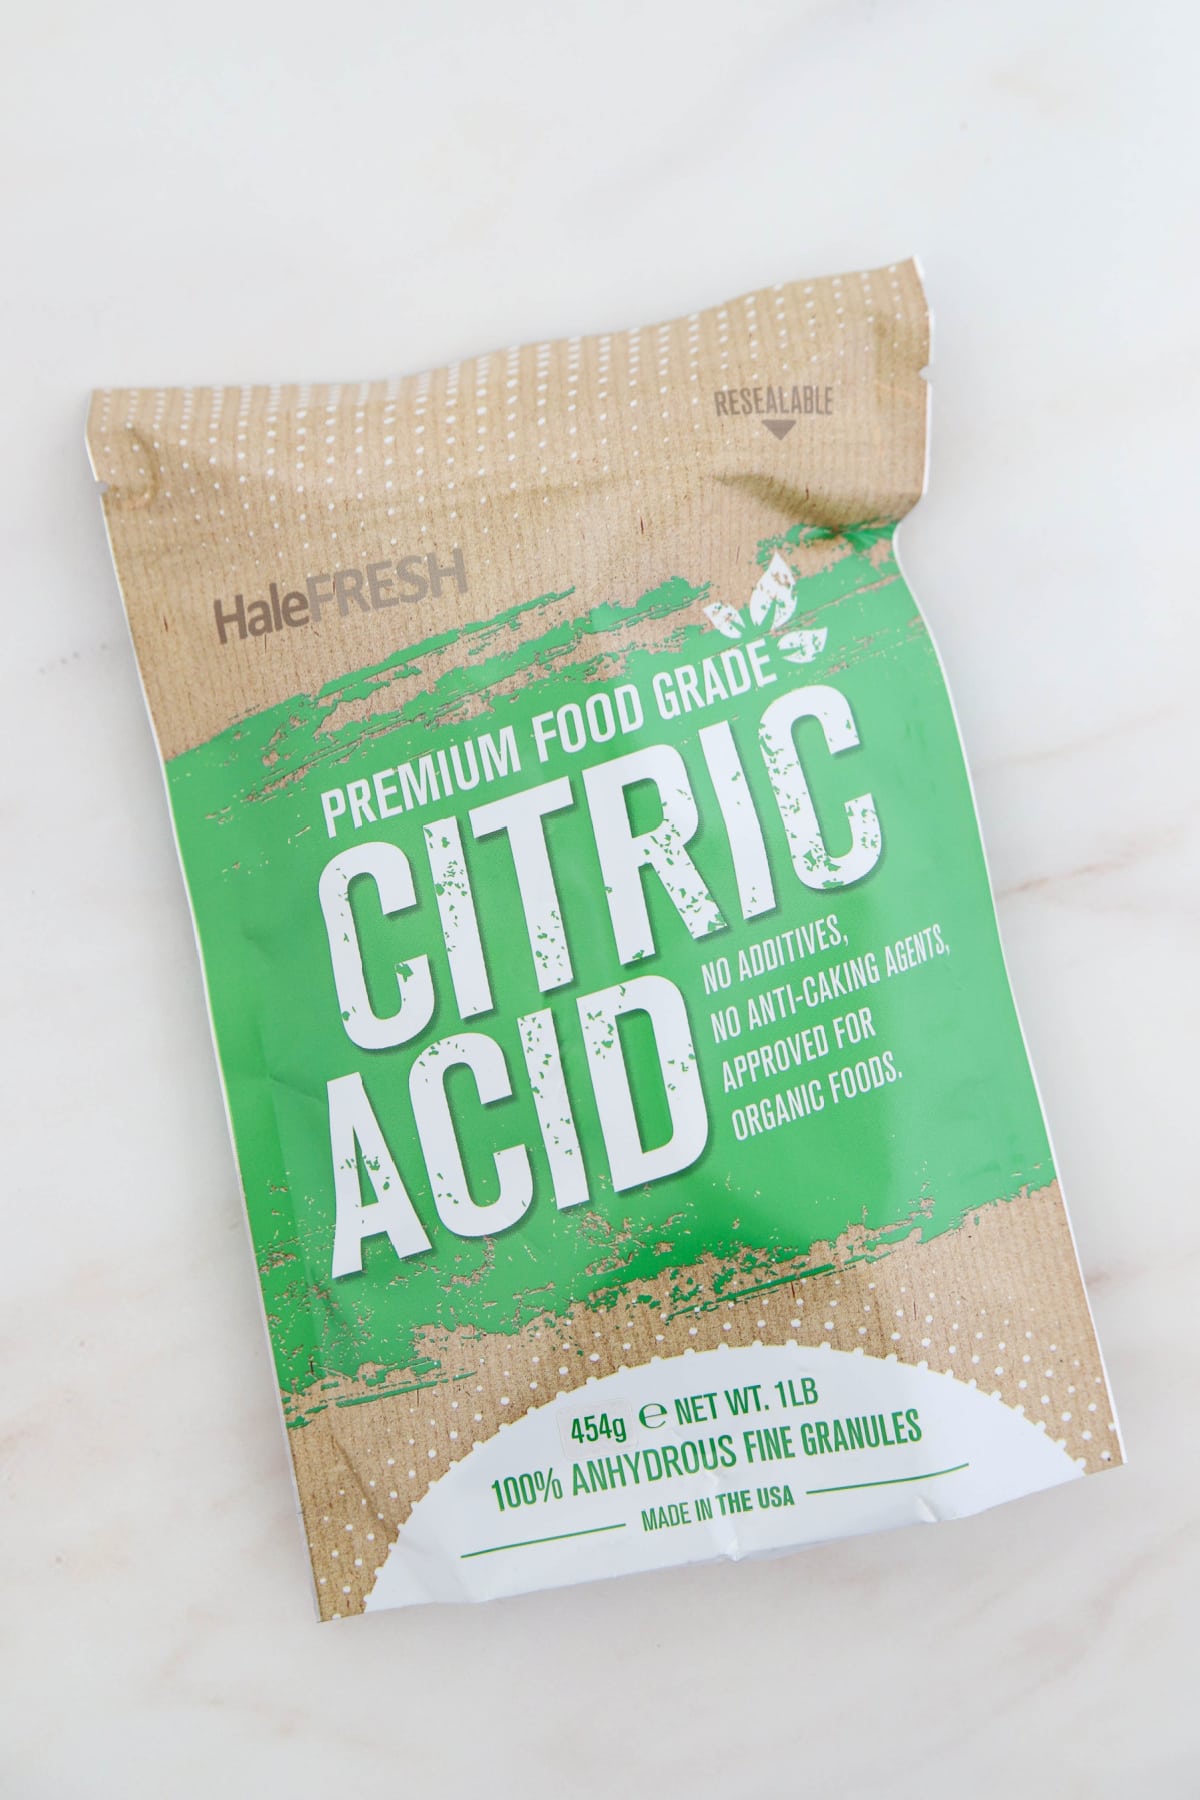 Bag of citric acid